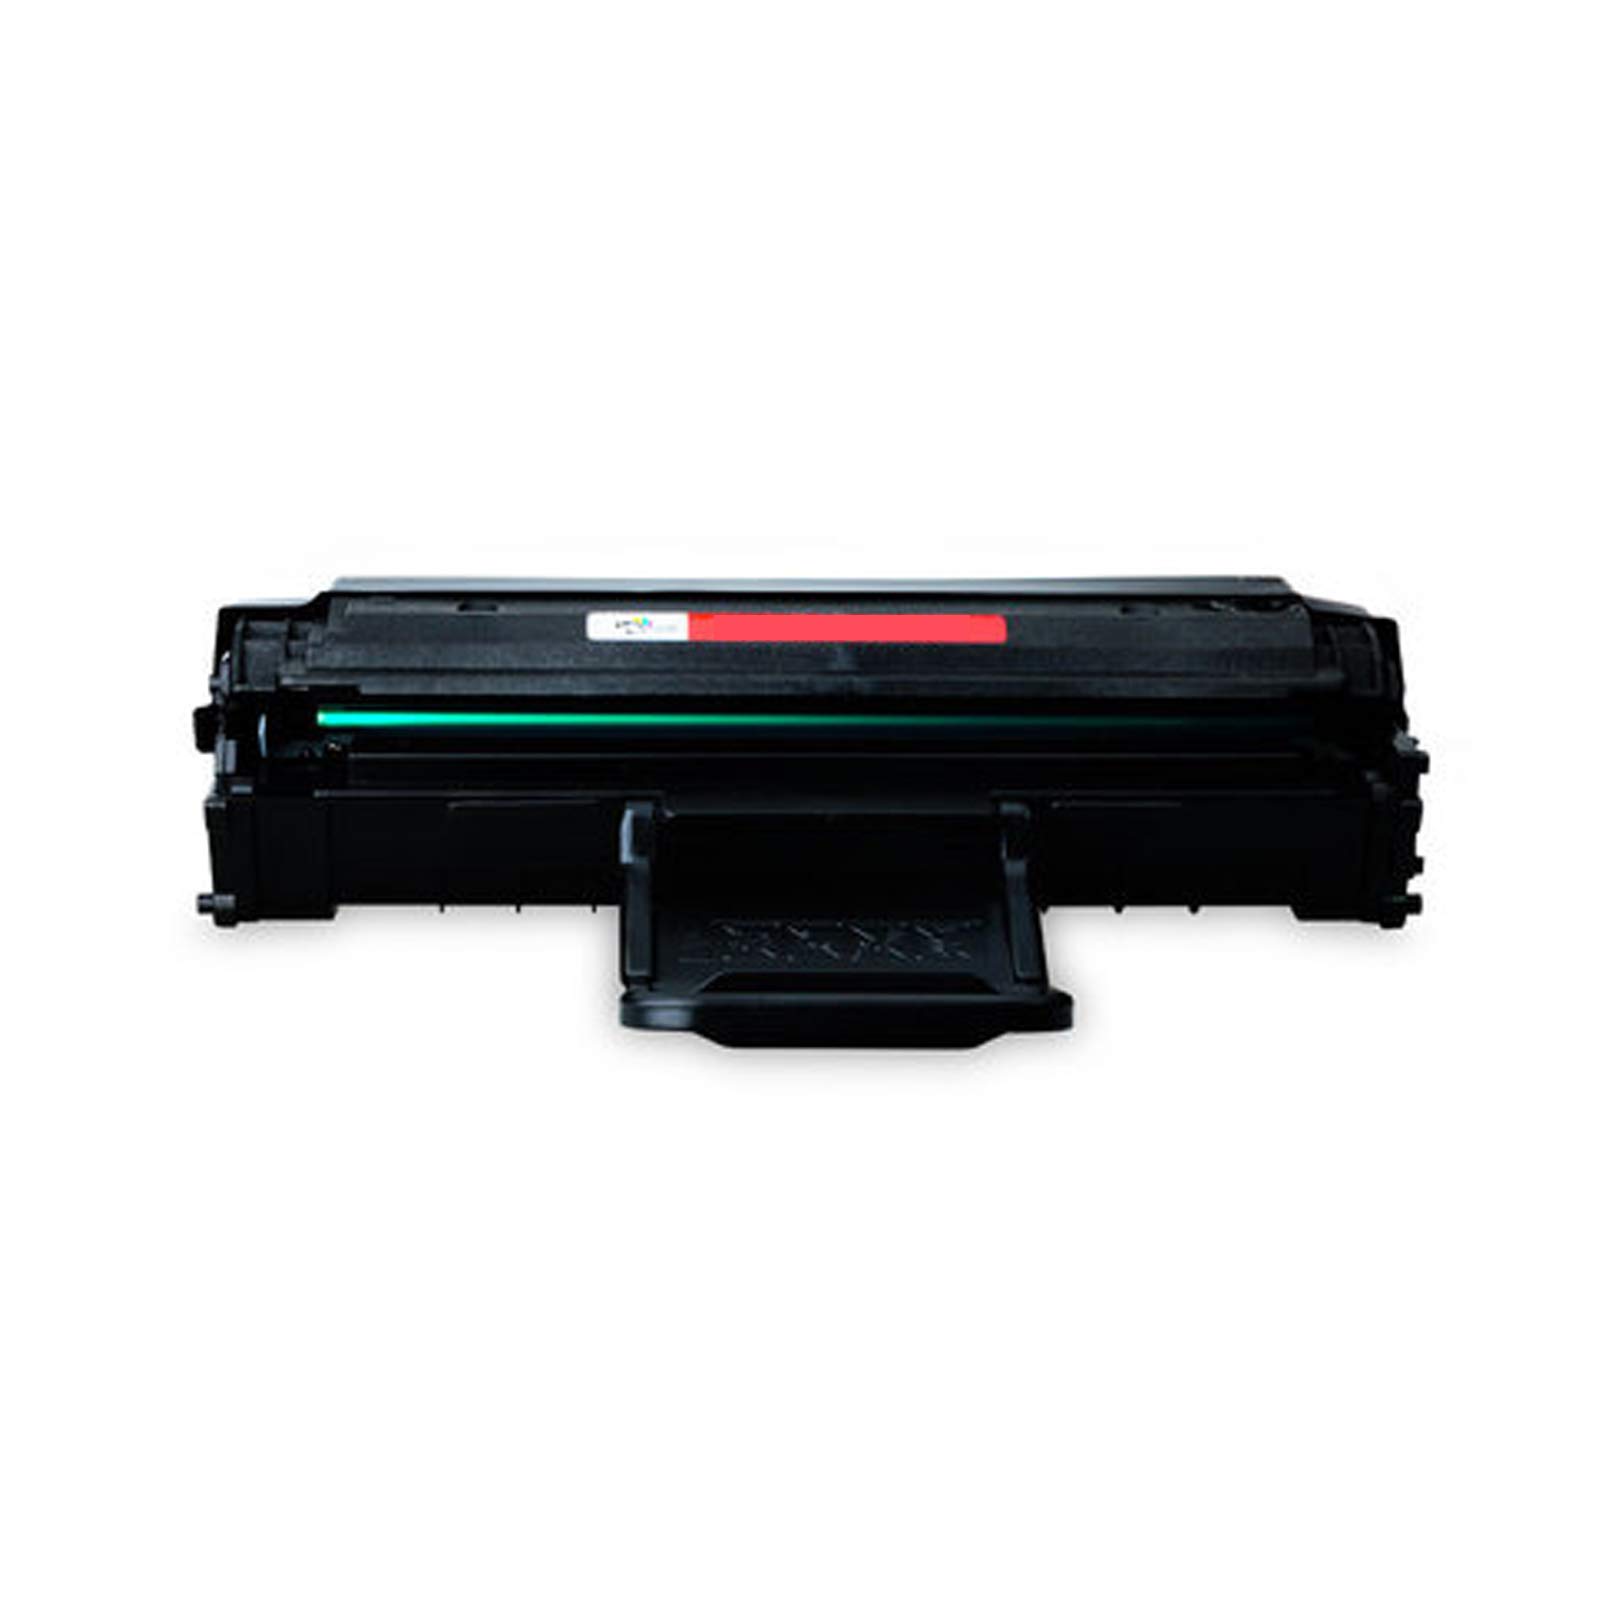 Samsung ML-1642 Laser Printer series